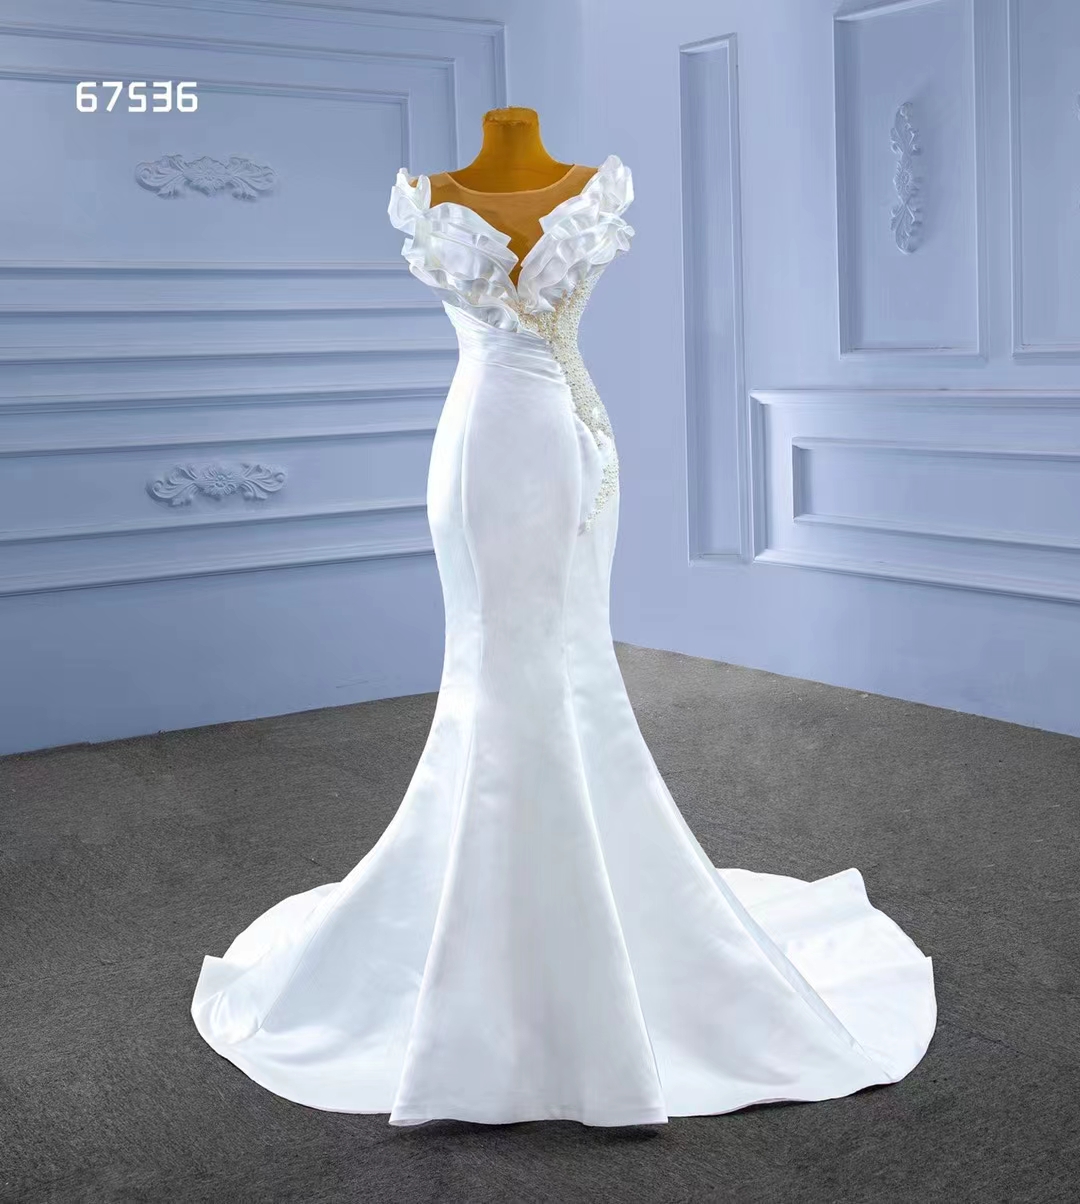 Sexy Soft Satin White Wedding Mermaid Dress Trend Design Partial Beading SM67536